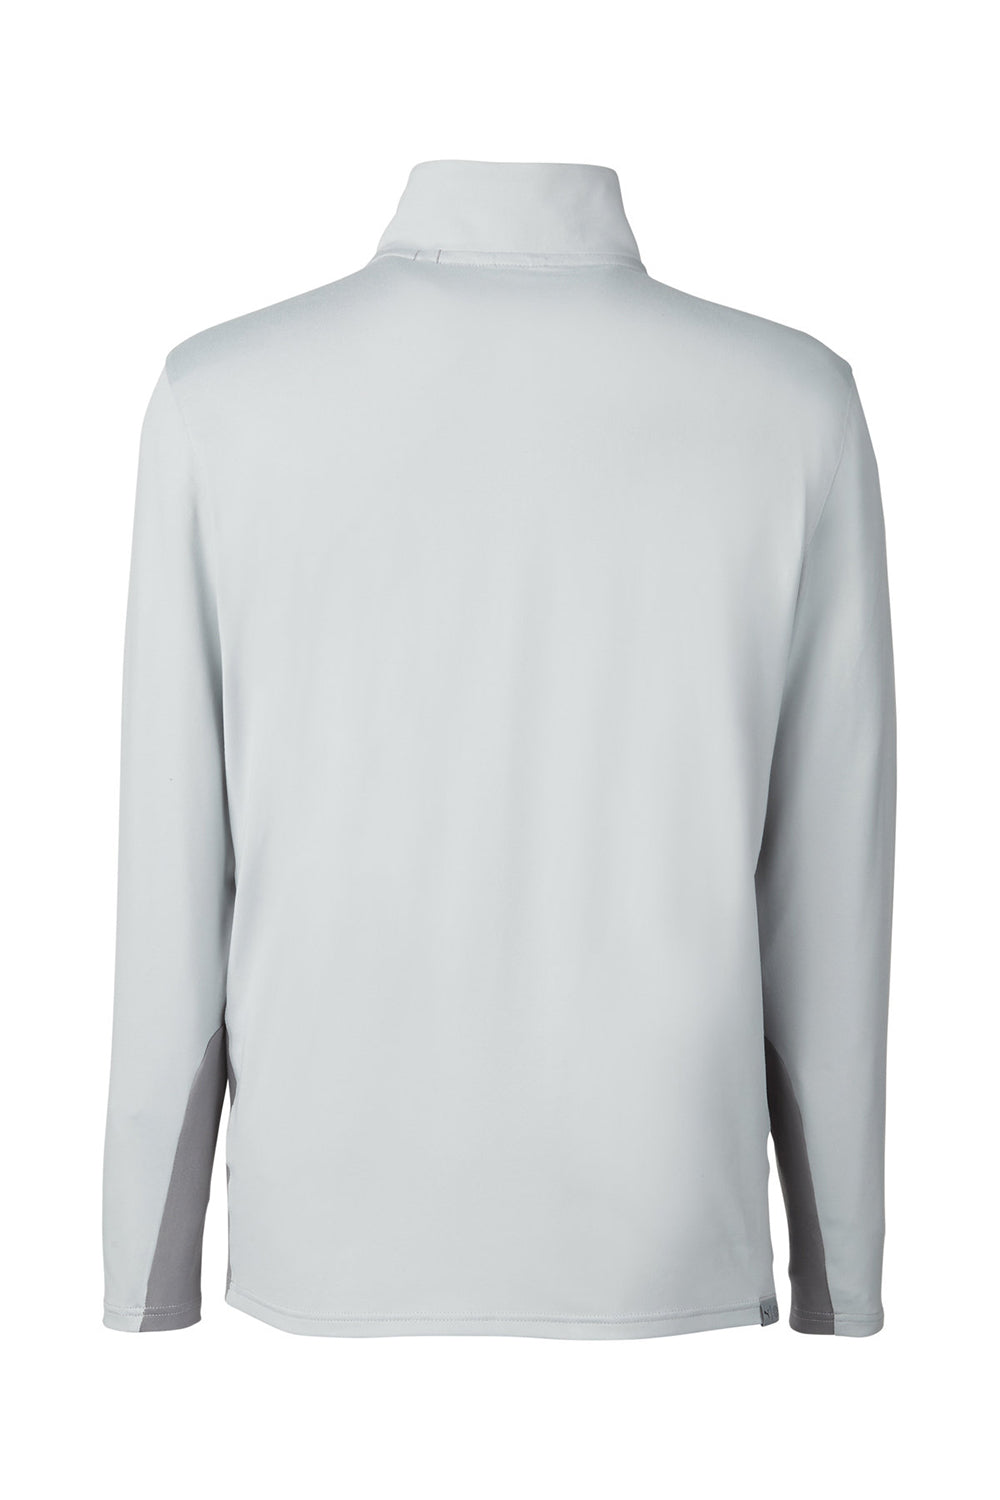 Puma 599127 Mens Gamer 1/4 Zip Sweatshirt High Rise Grey Flat Back